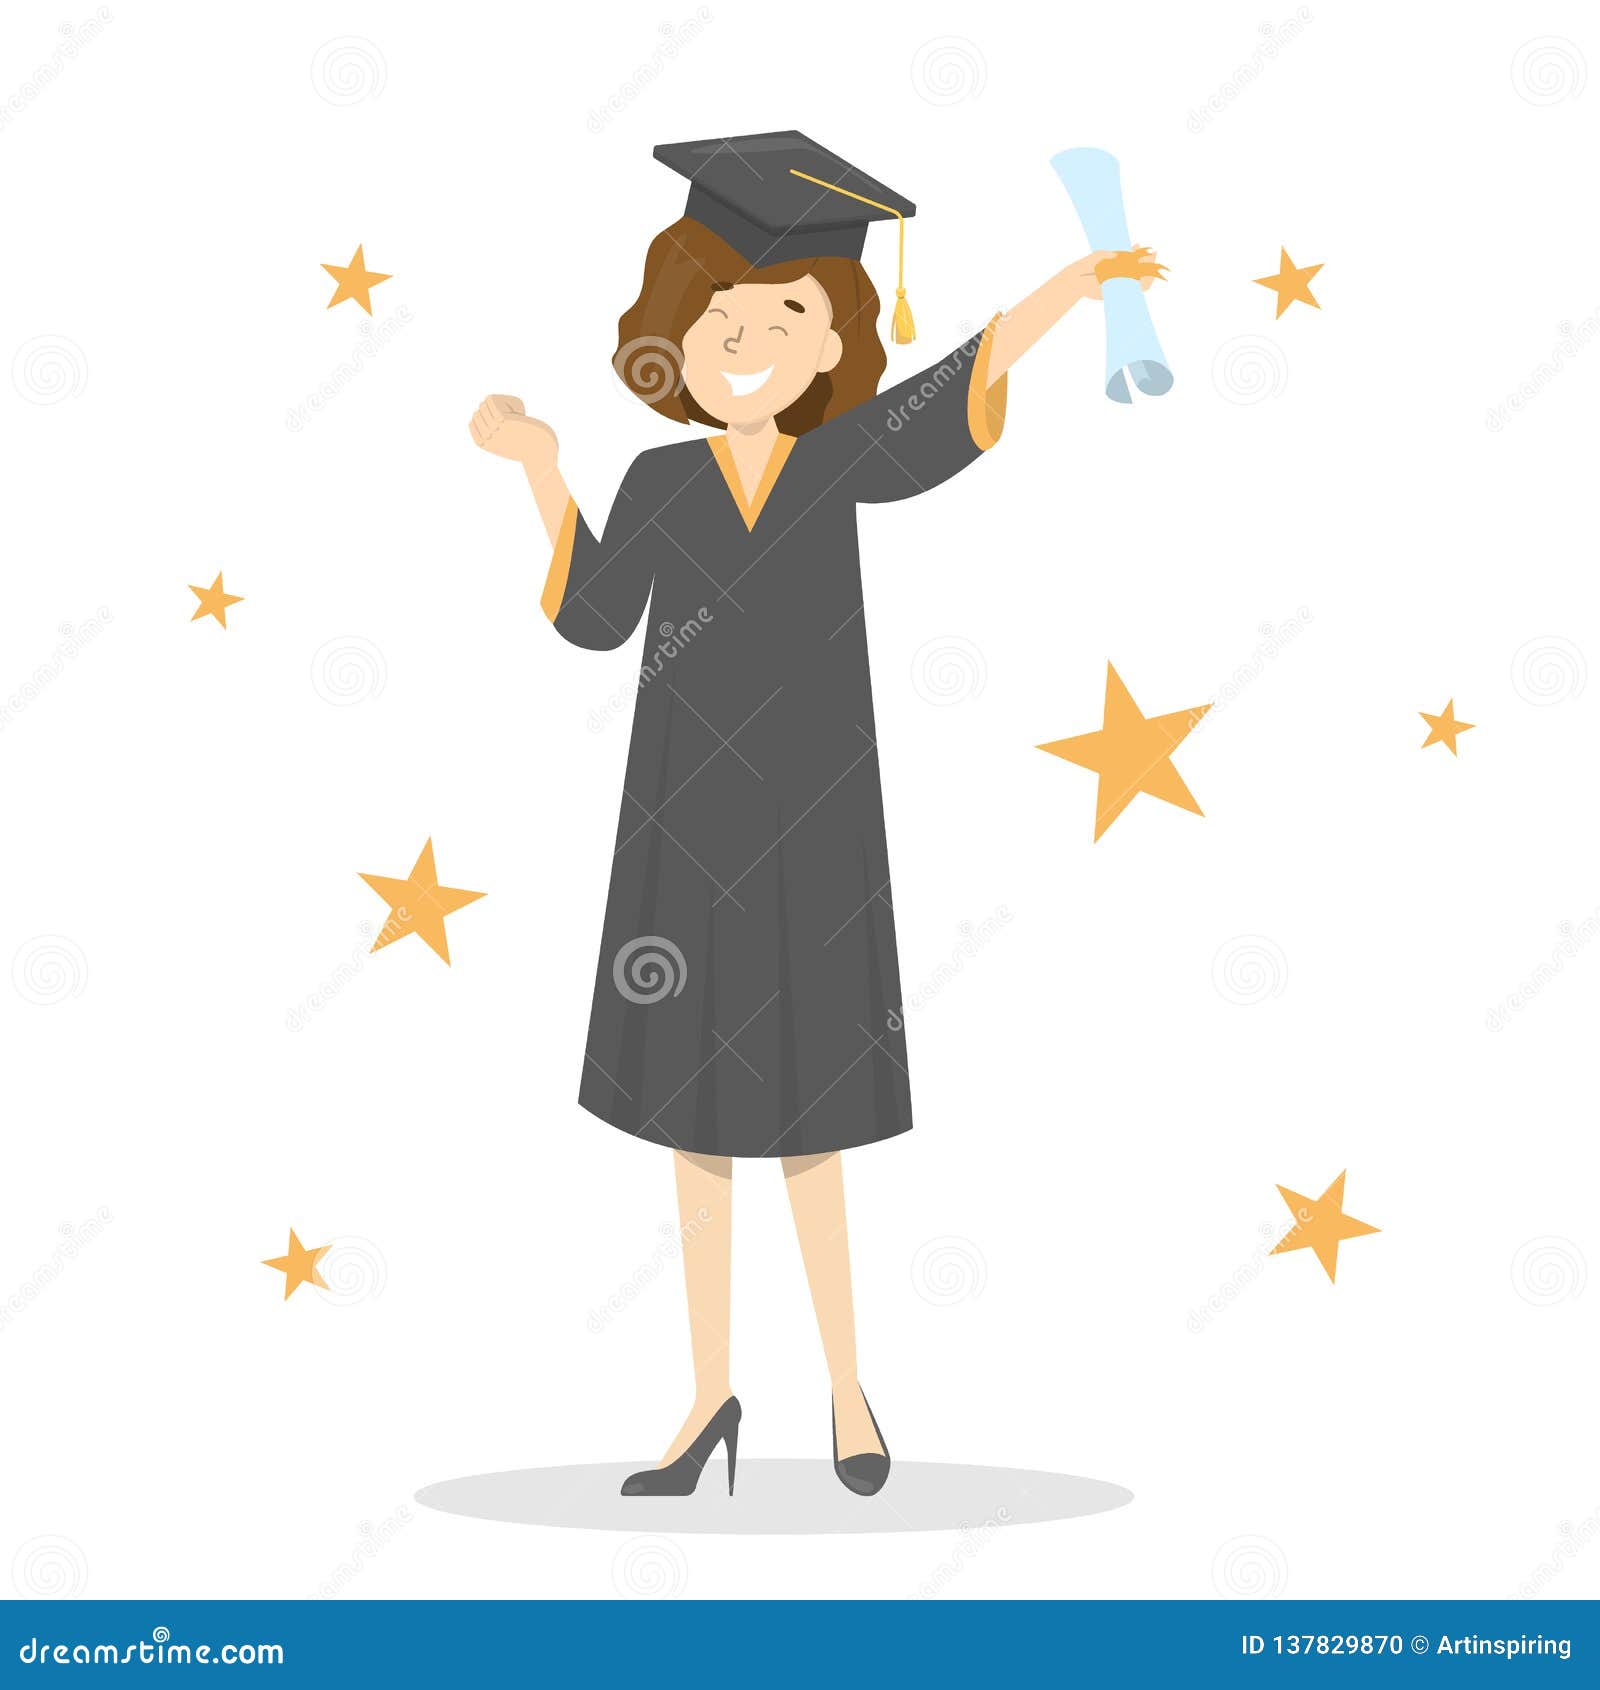 HOOD ONLY Bachelor Blue Hood for Graduation Academic Dress School | eBay